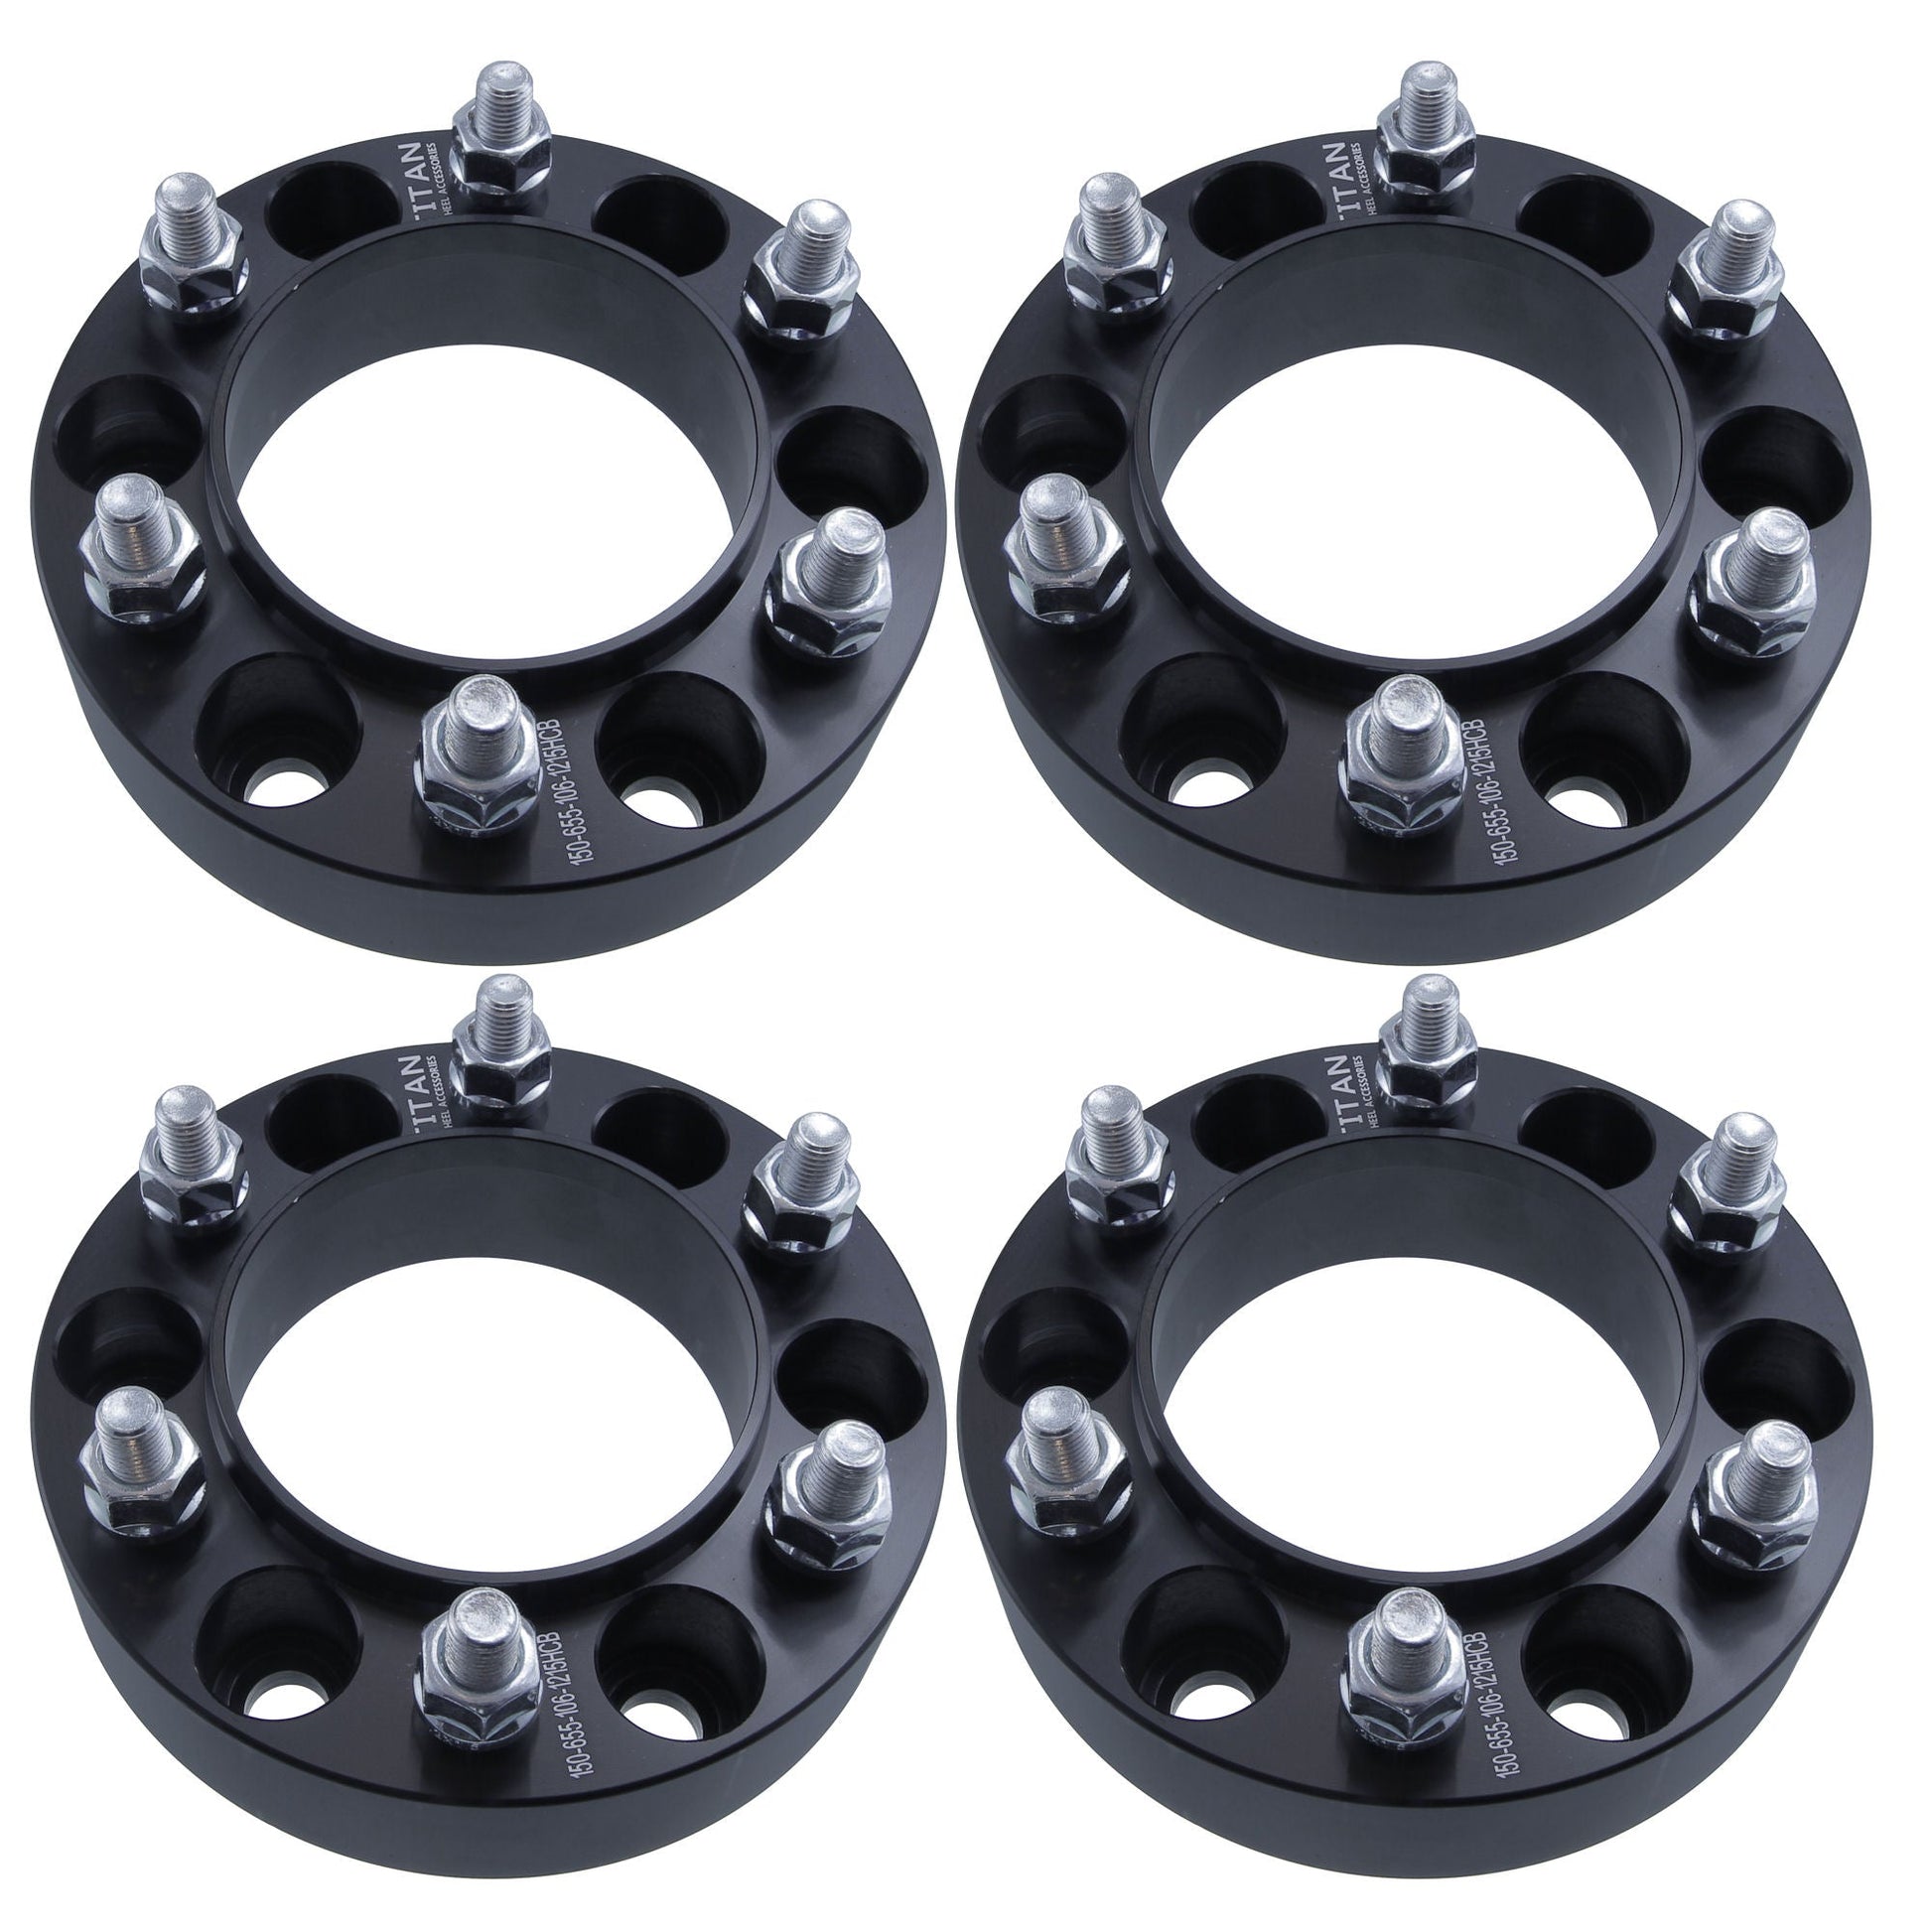 50mm (2") Titan Wheel Spacers for Isuzu Rodeo Trooper Toyota 4 Runner FJ Cruiser | 6x139.7 (6x5.5) | 106 Hubcentric |12x1.5 Studs |  Set of 4 | Titan Wheel Accessories